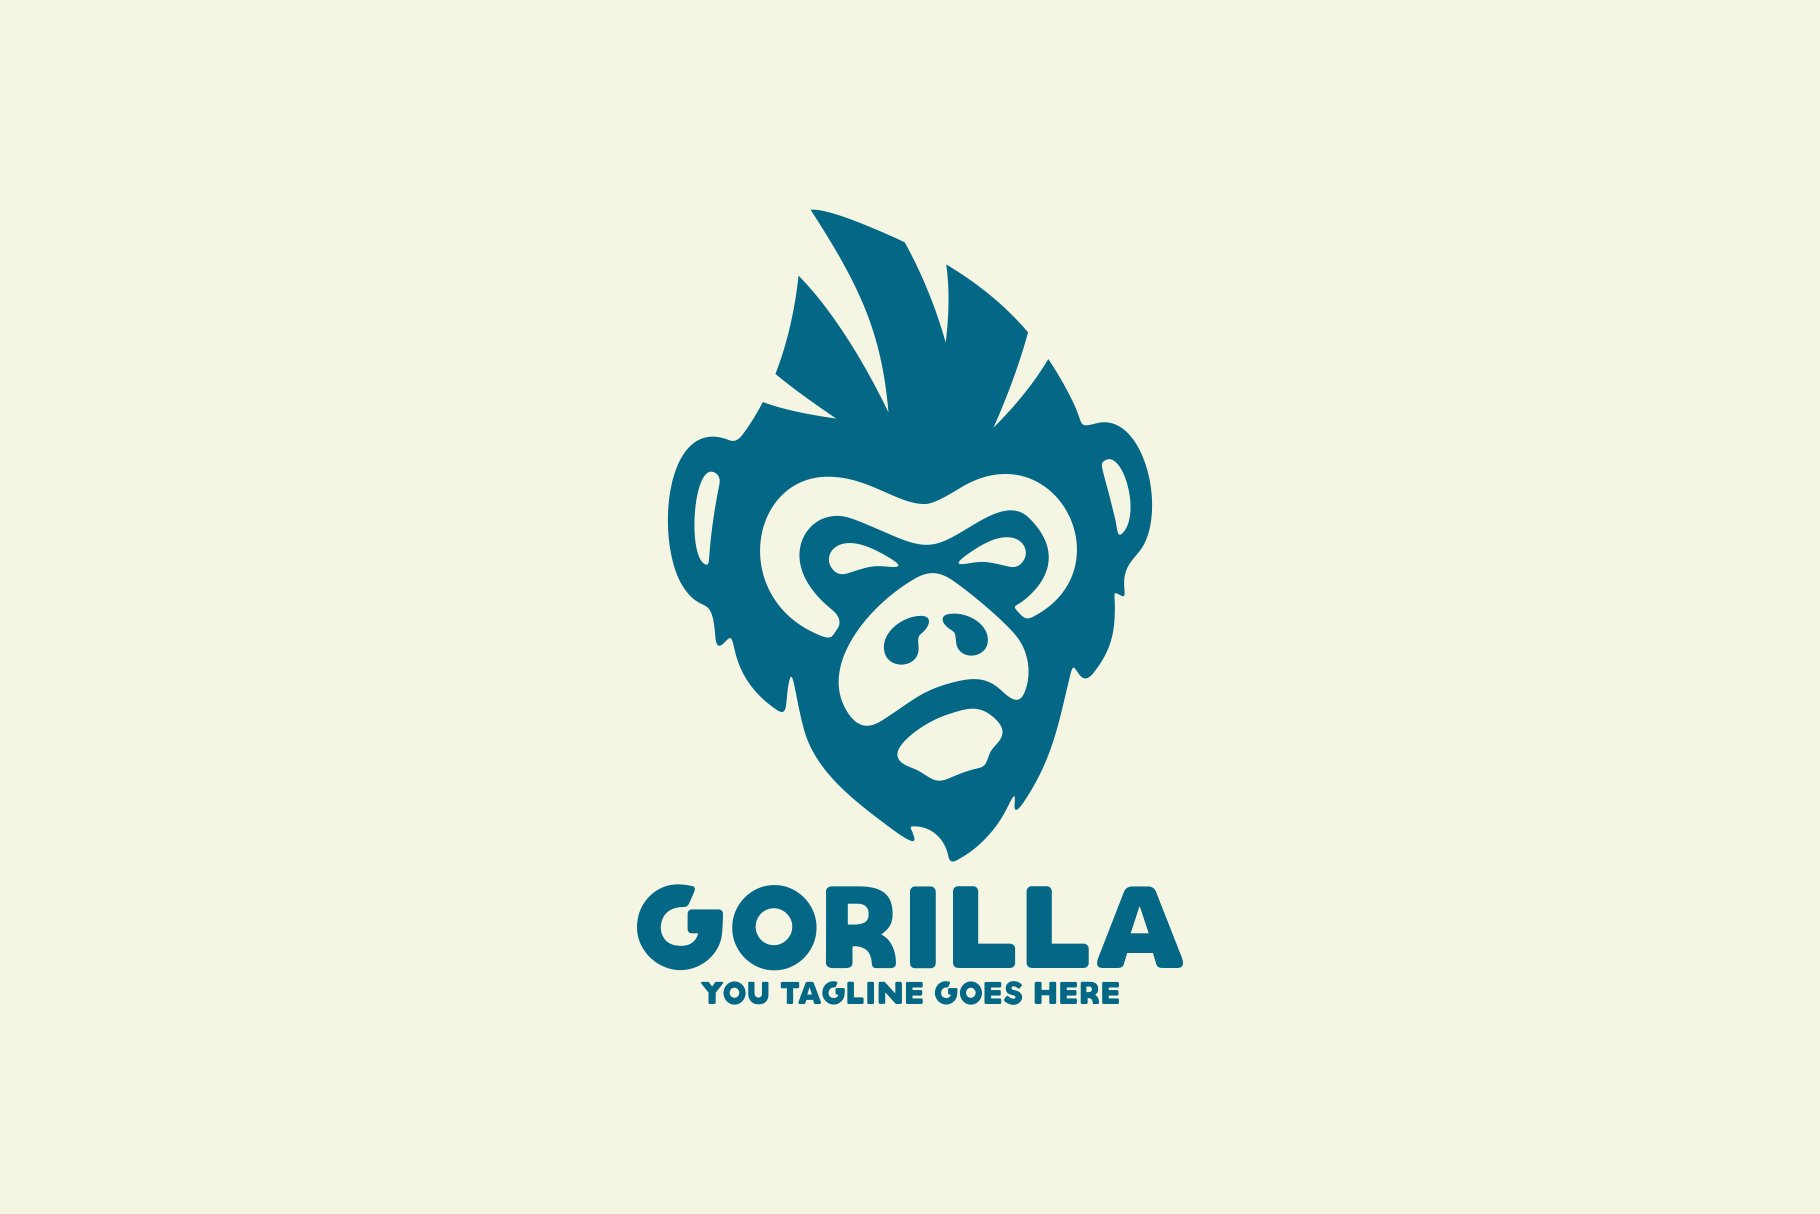 Gorilla logo cover image.